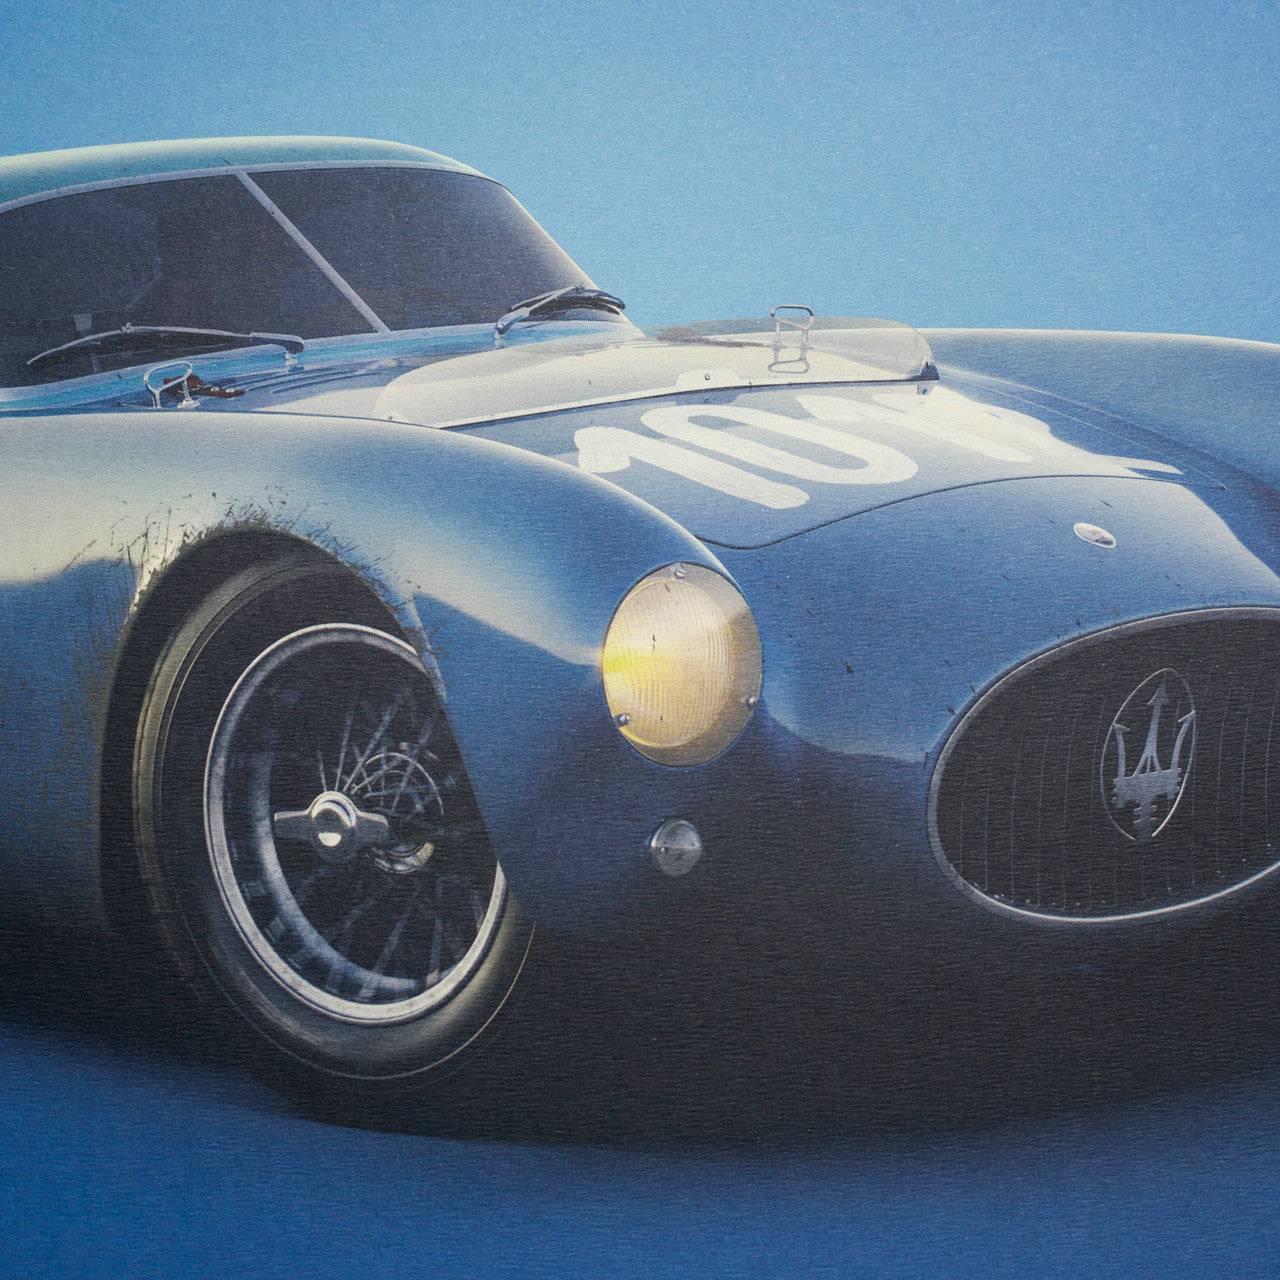 Maserati A6GCS Berlinetta - 1954 - Blue | Limited Edition